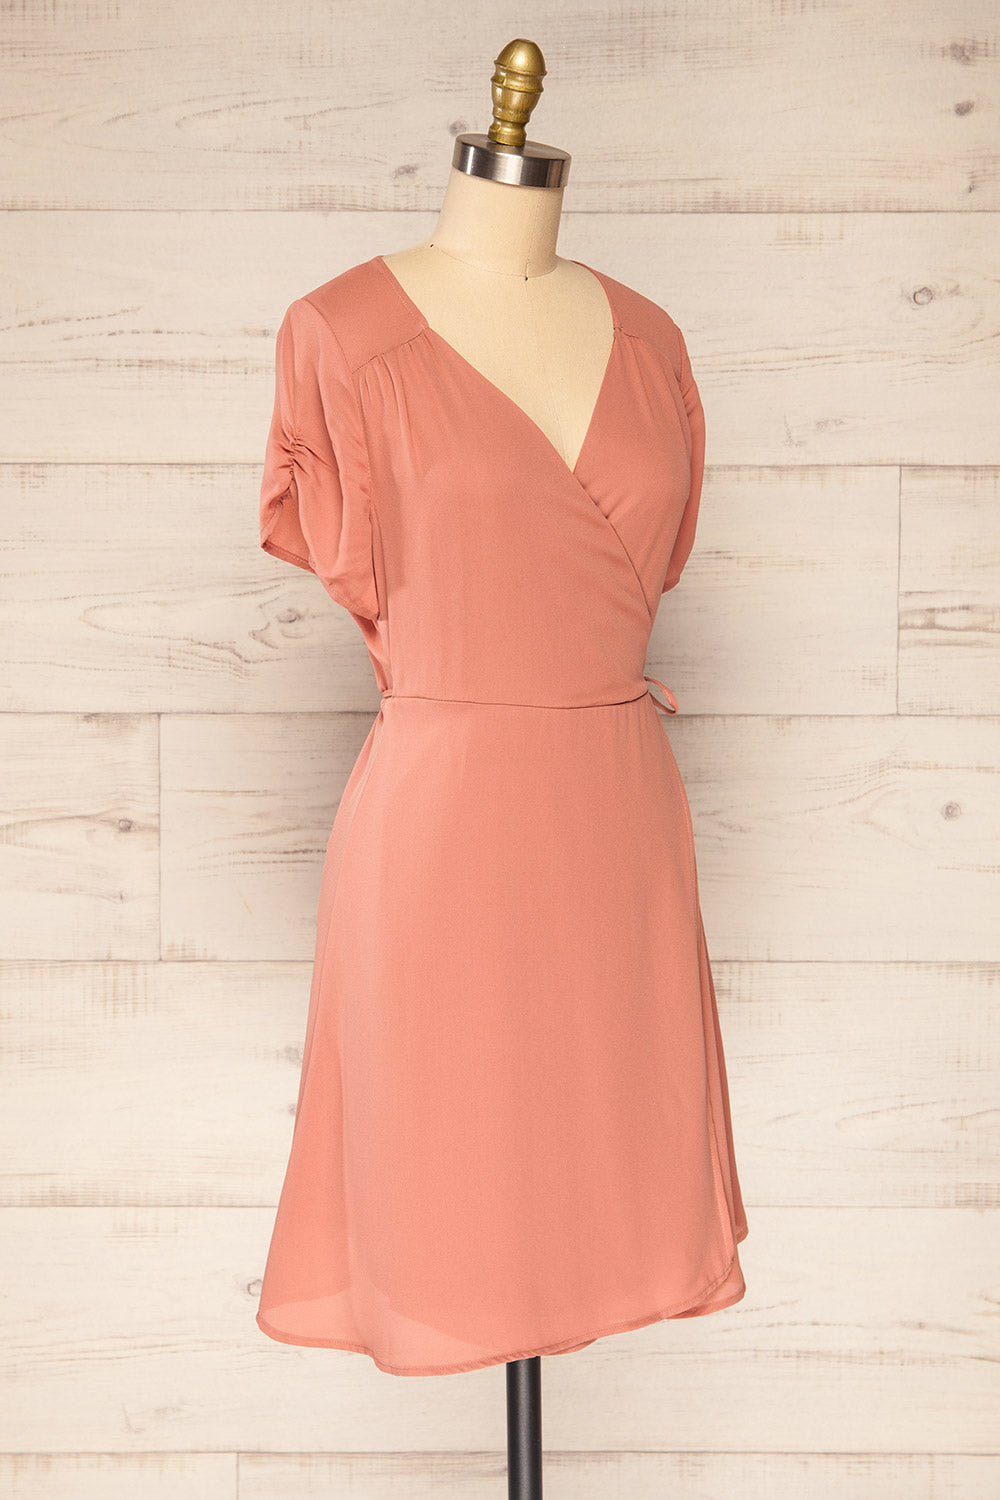 Jaurel Dusty Pink Short Sleeve Wrap Dress | La petite garçonne side view 